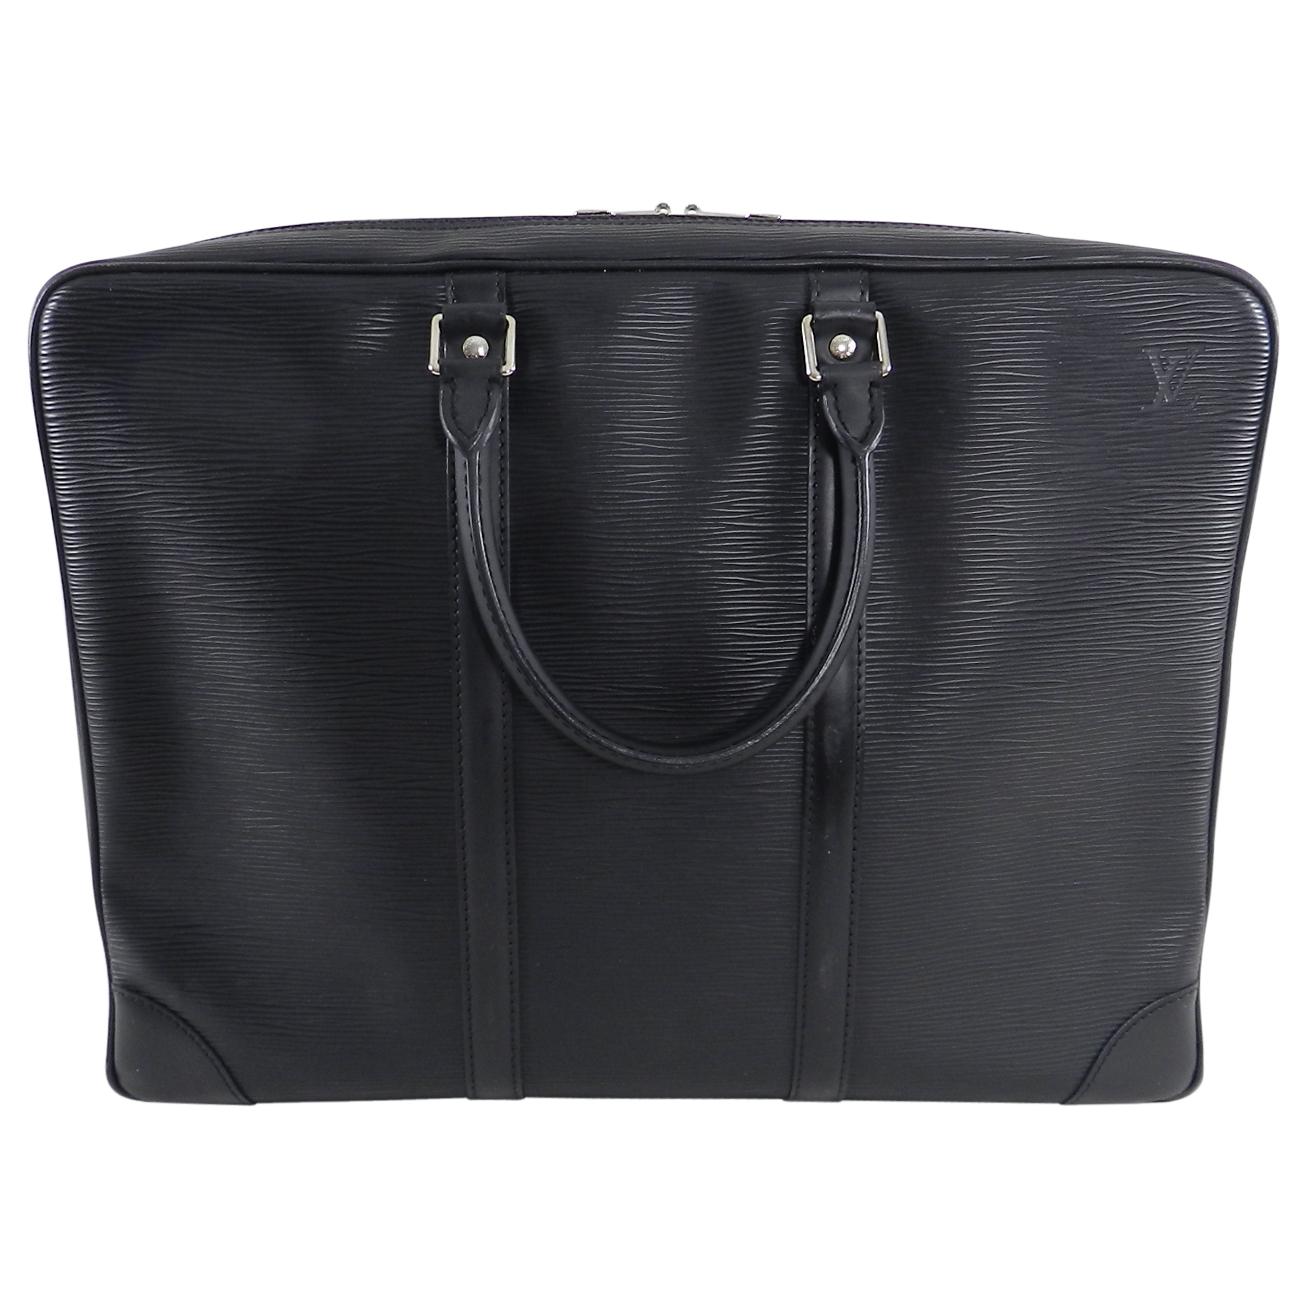 Louis Vuitton Black Epi Porte Documents Voyage Laptop Bag.  Double handles, name tag, silvertone double zippers.  Date code for year 2007.  Excellent clean pre-owned condition.  Measures 16 x 11.75 x 2.25